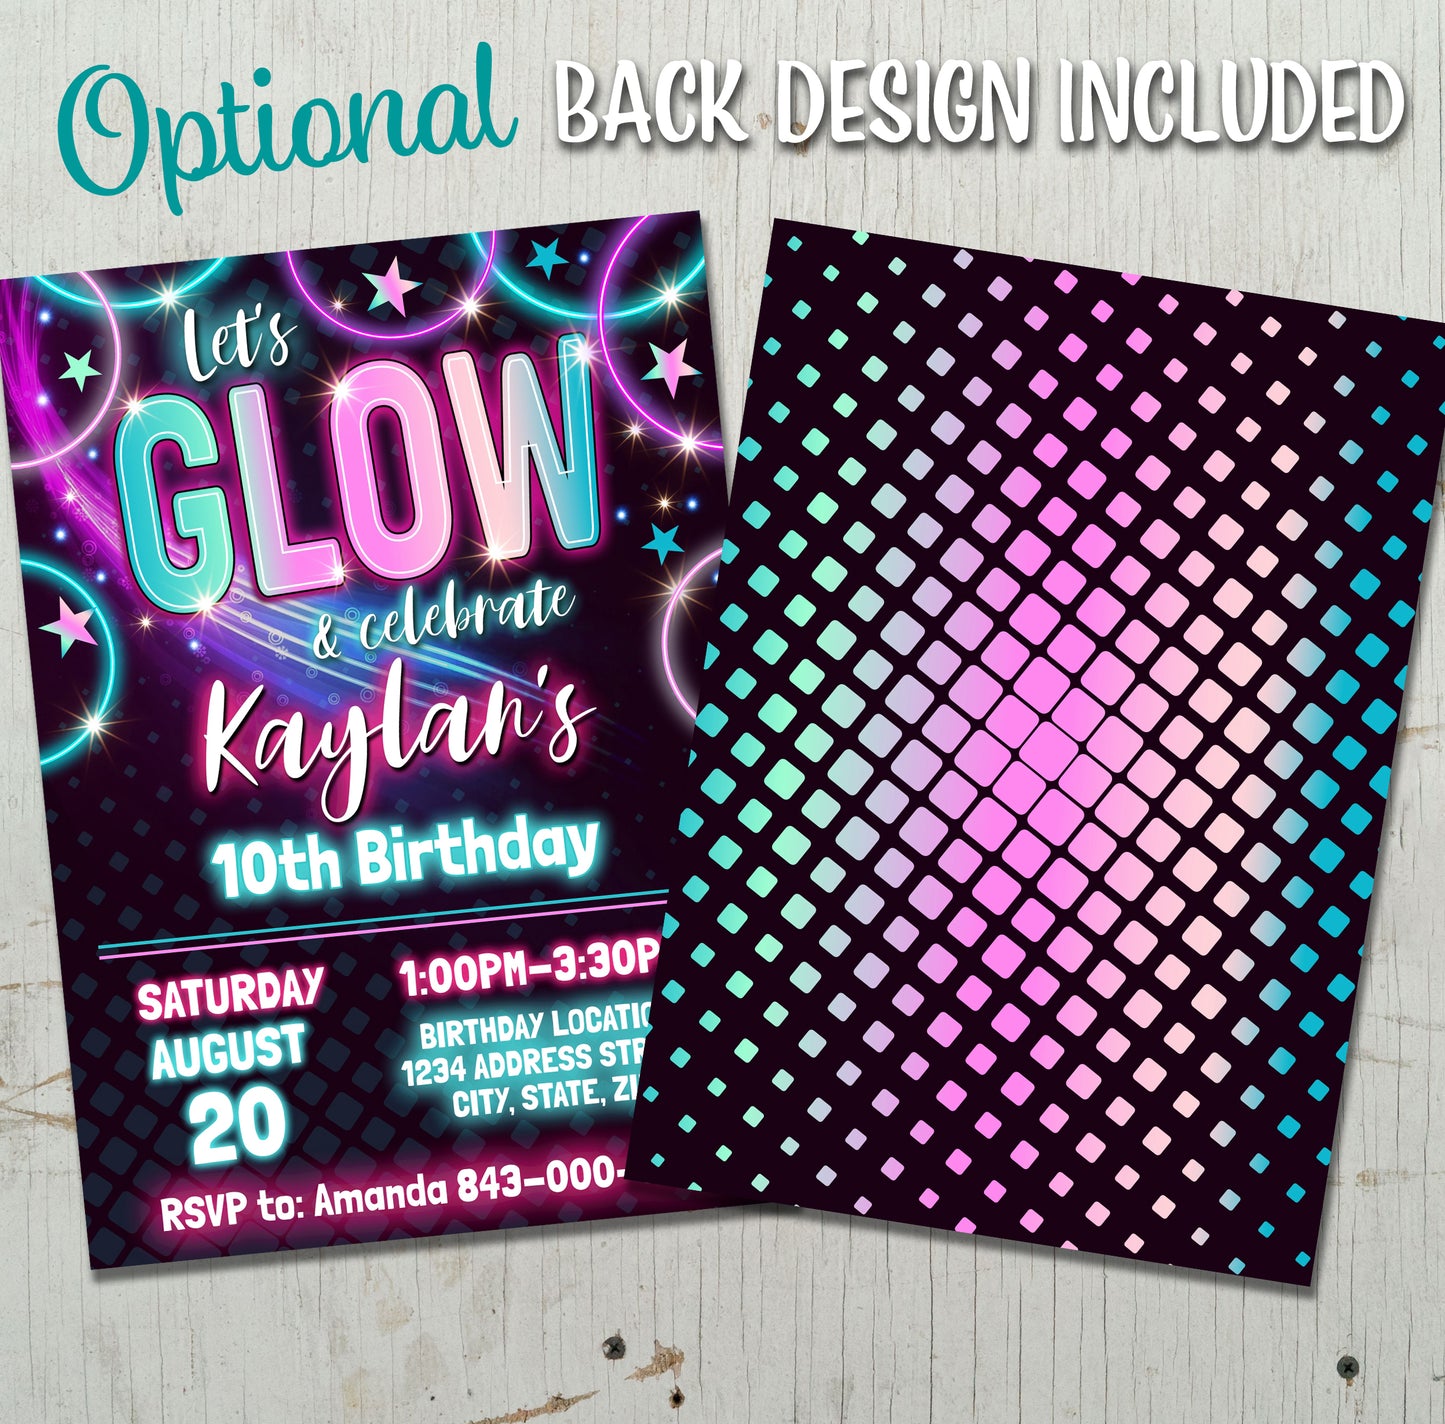 Glow in the Dark Birthday Party Invite - Luminous Celebration